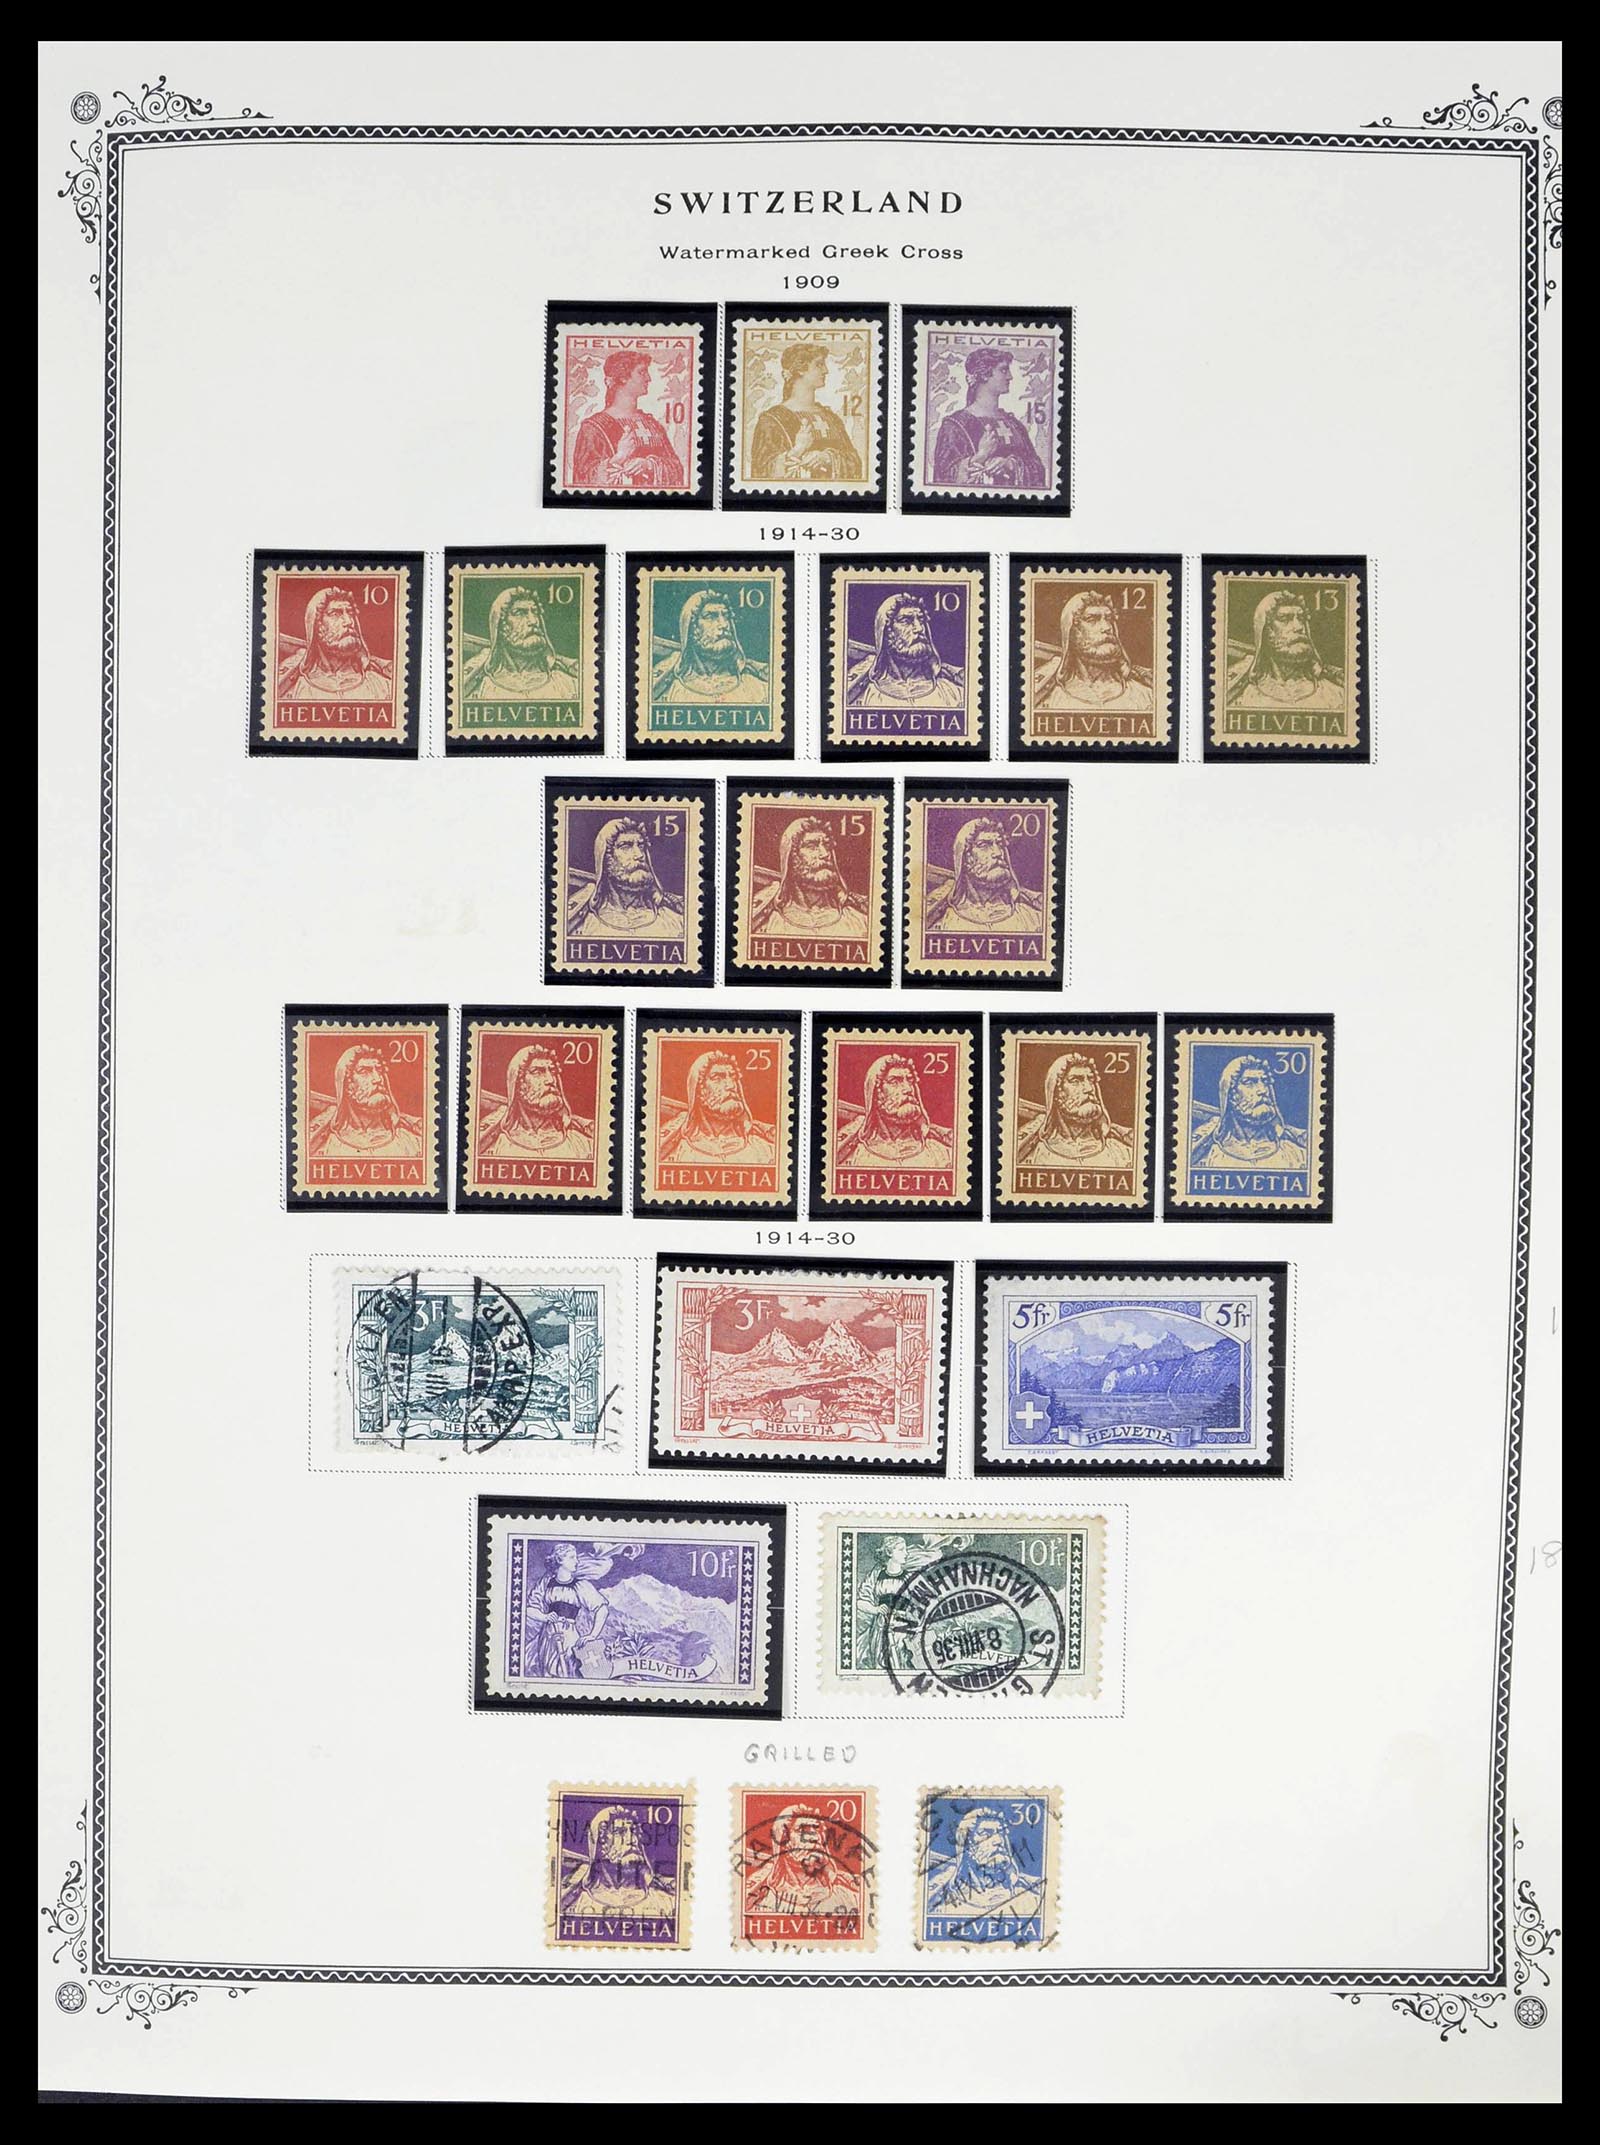 39178 0014 - Stamp collection 39178 Switzerland 1850-1989.